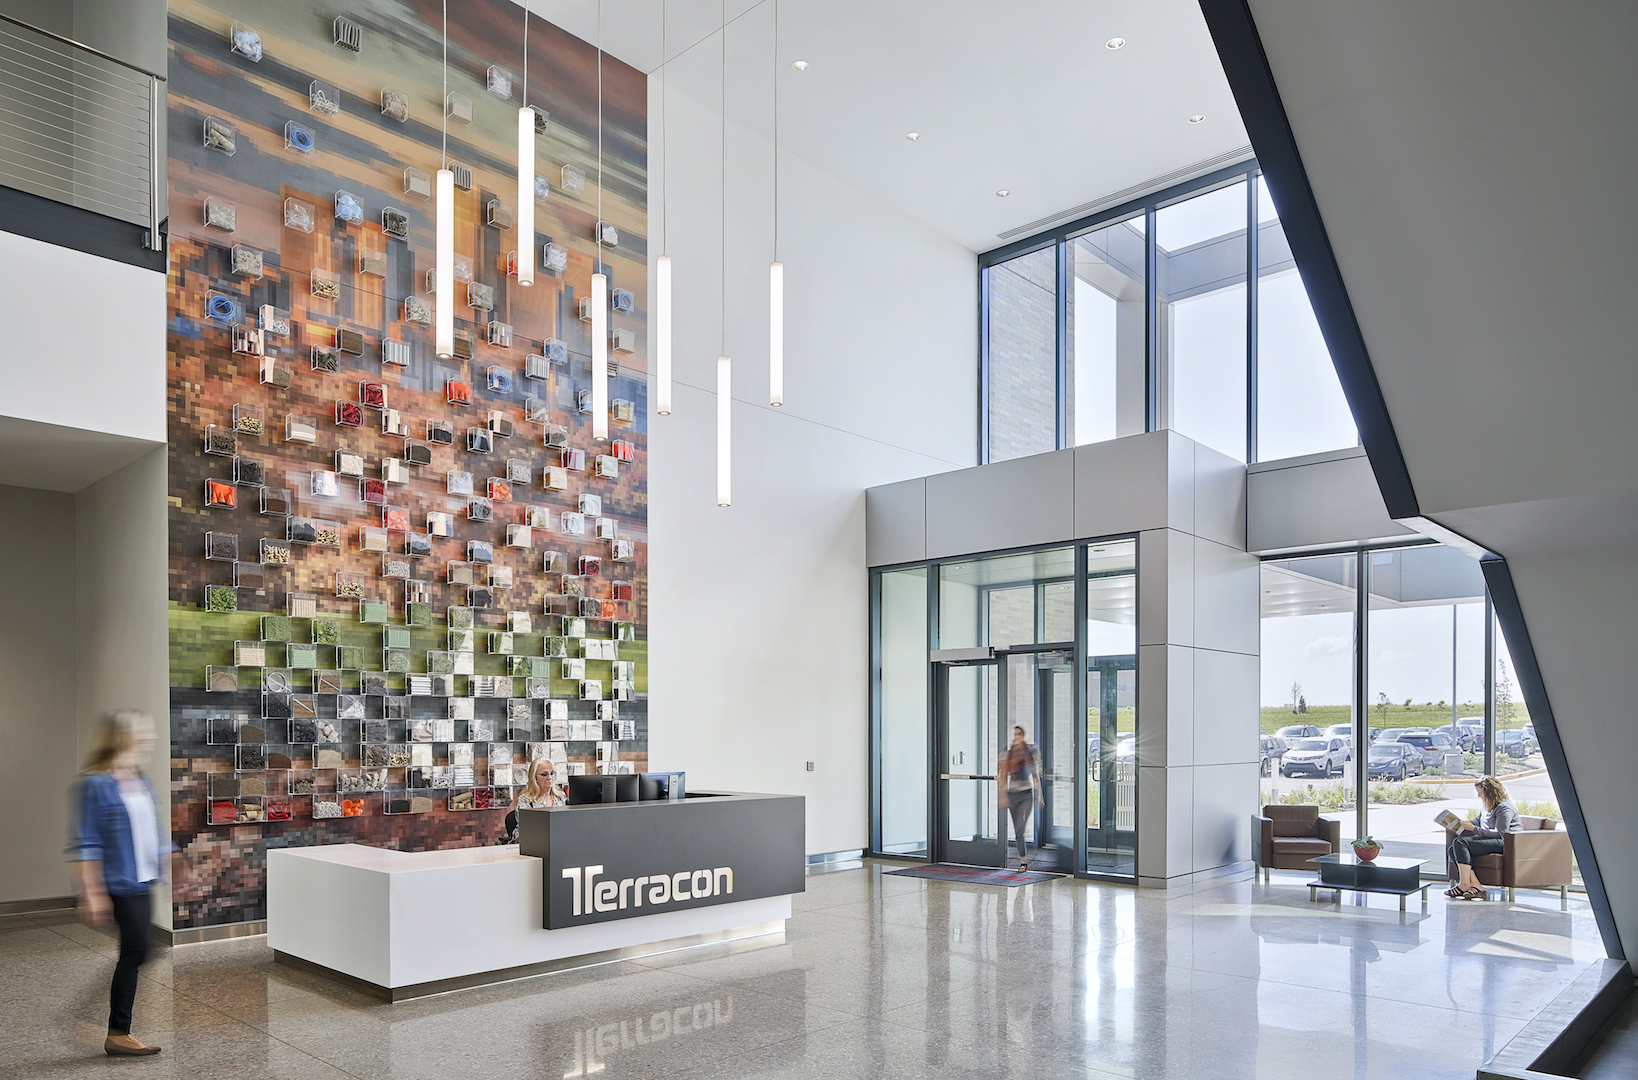 Terracon world headquarters in Olathe, KS